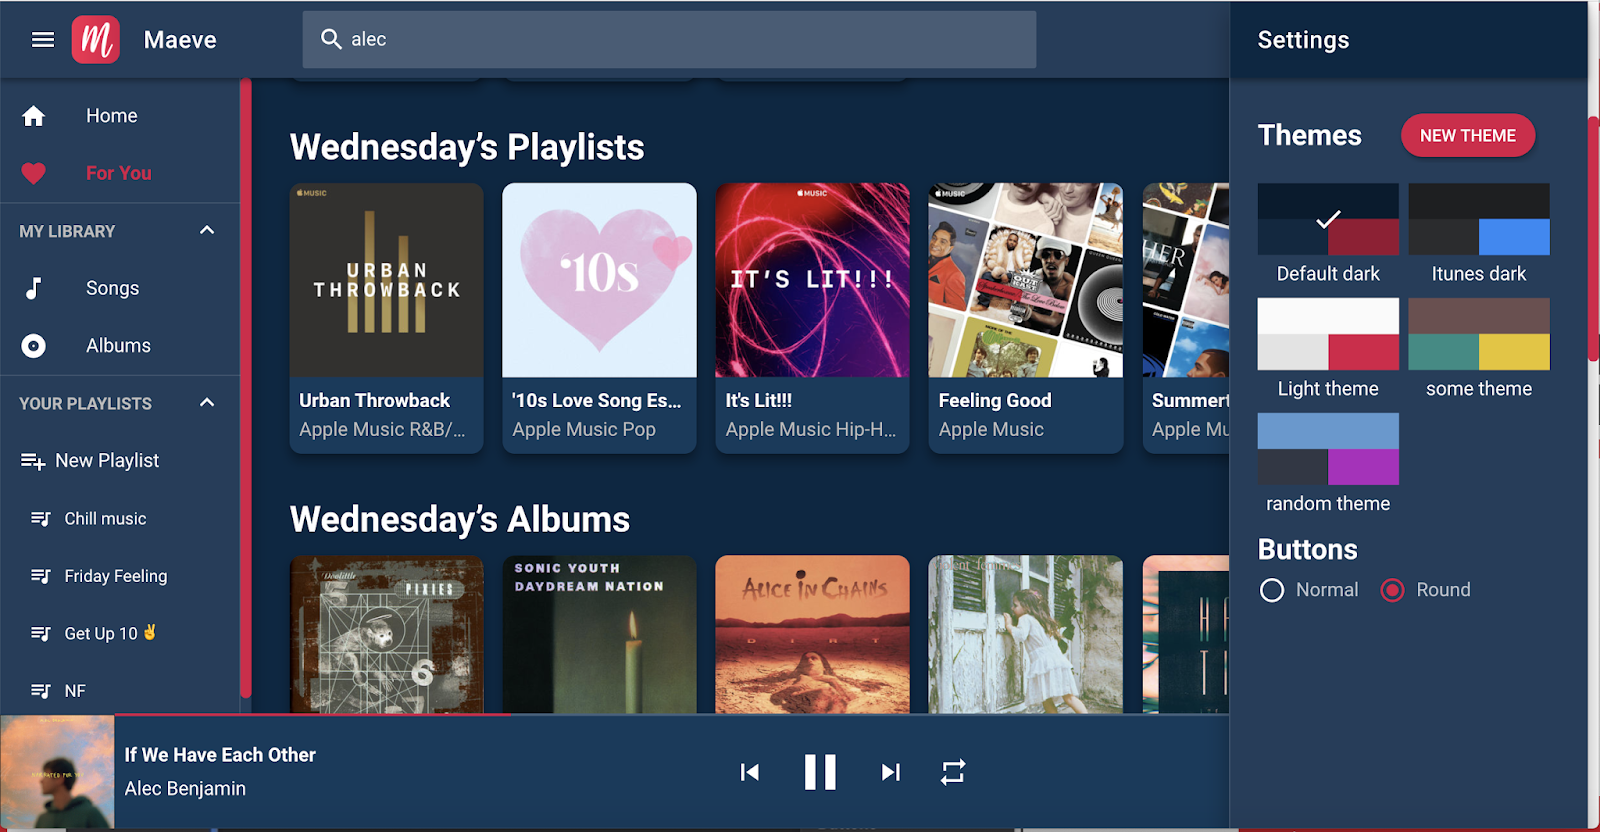 New playlist. Apple Music Library. Темы спотифай. Ласт ФМ спотифай. Spotify Themes.